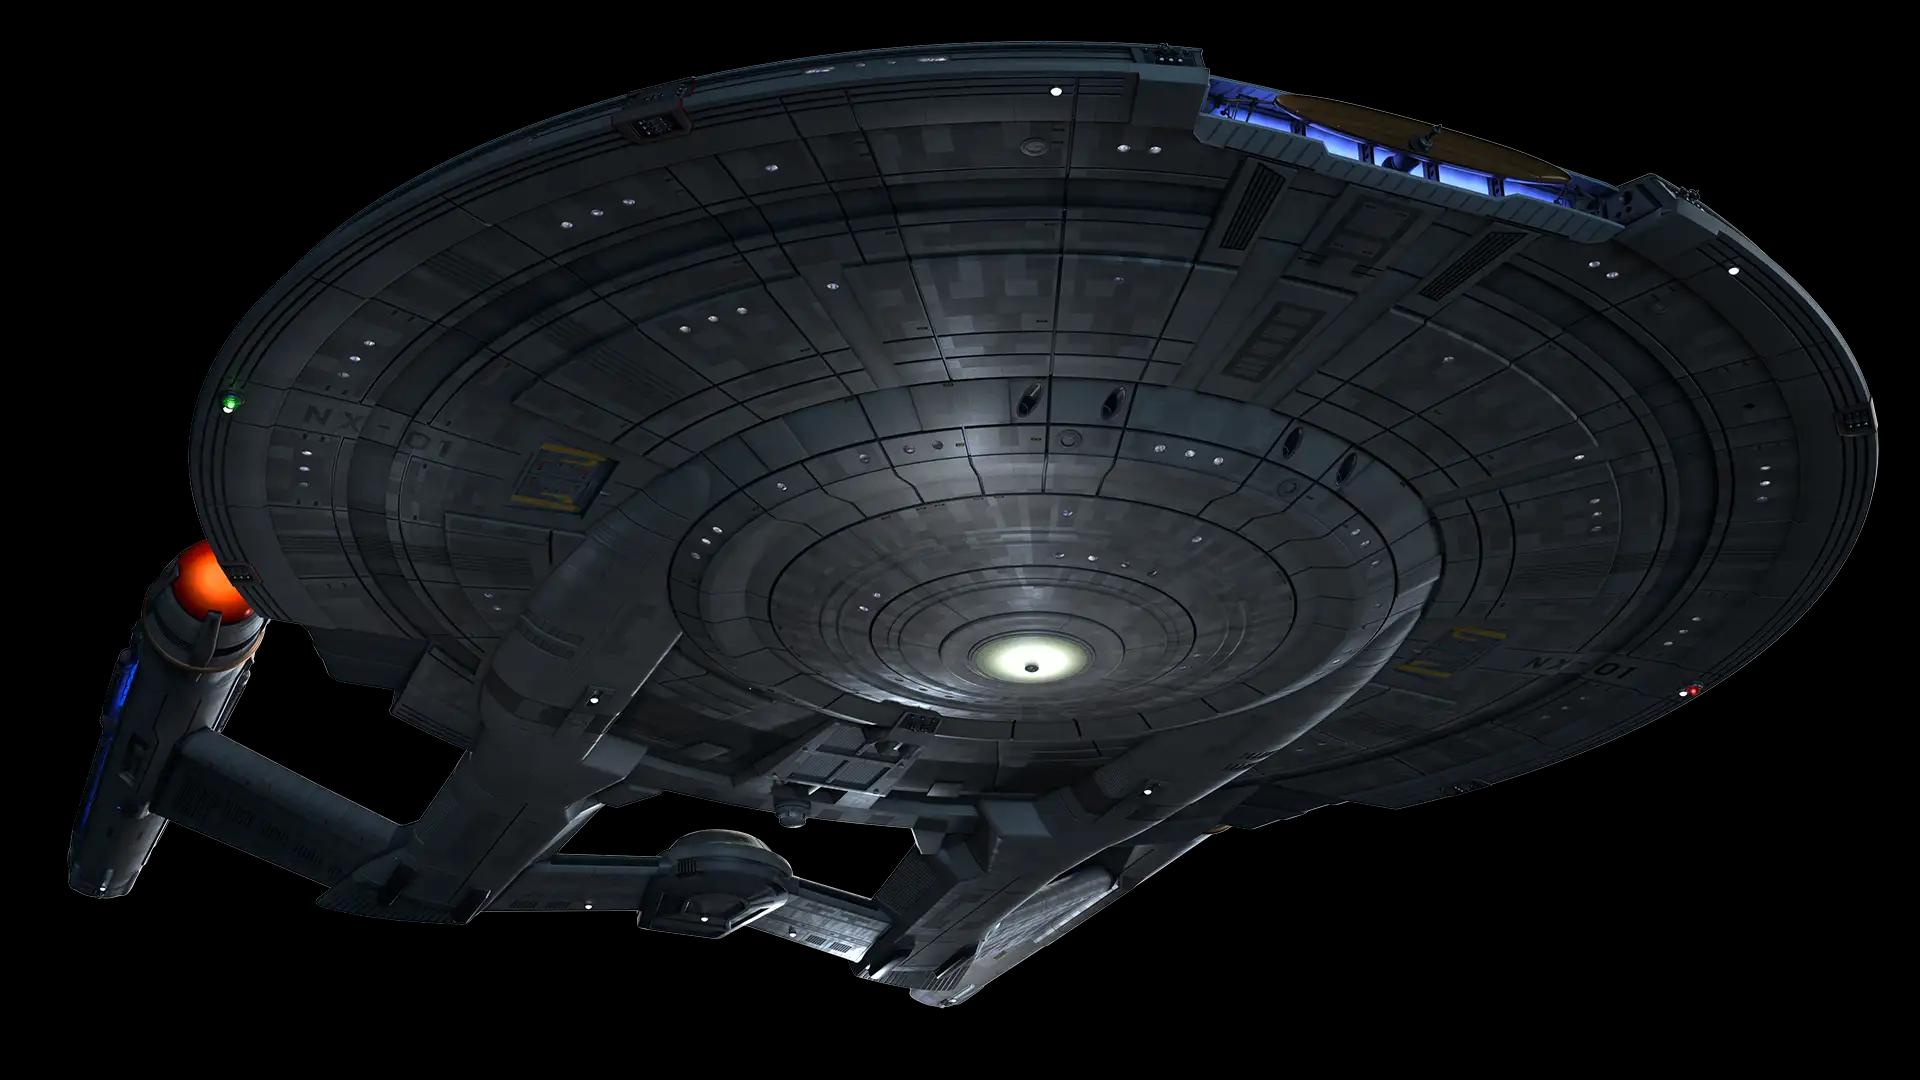 Starship Enterprise NX-01 (2155) - Roddenberry Archive